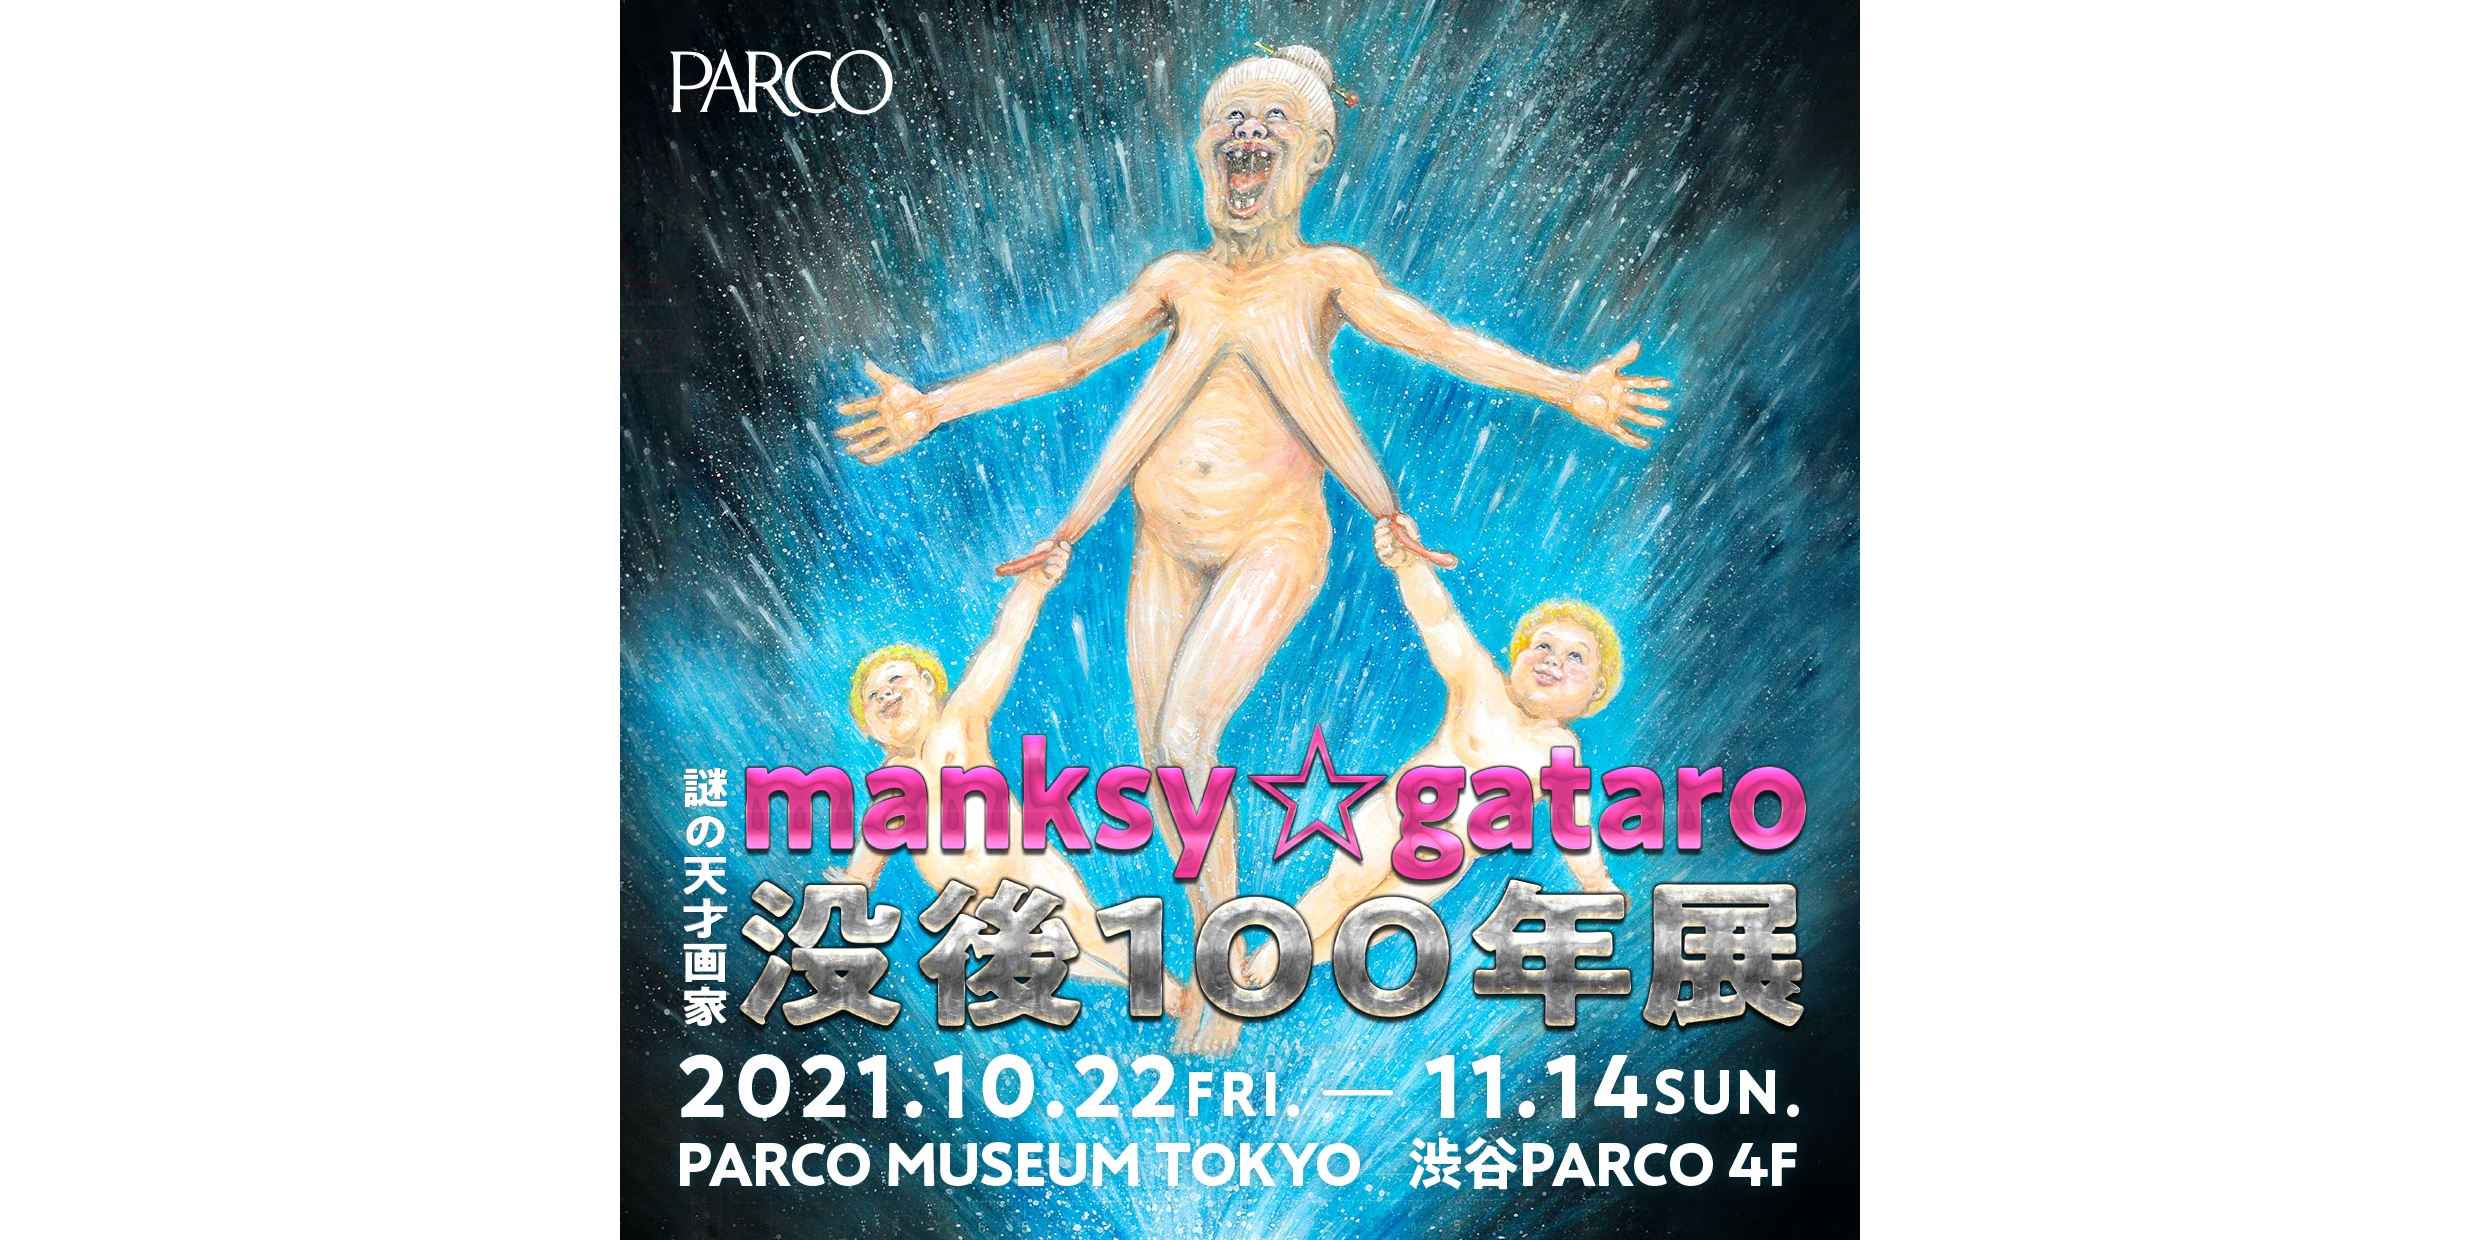 「謎の天才画家manksy ☆ gataro 没後100年展」PARCO MUSEUM TOKYO1